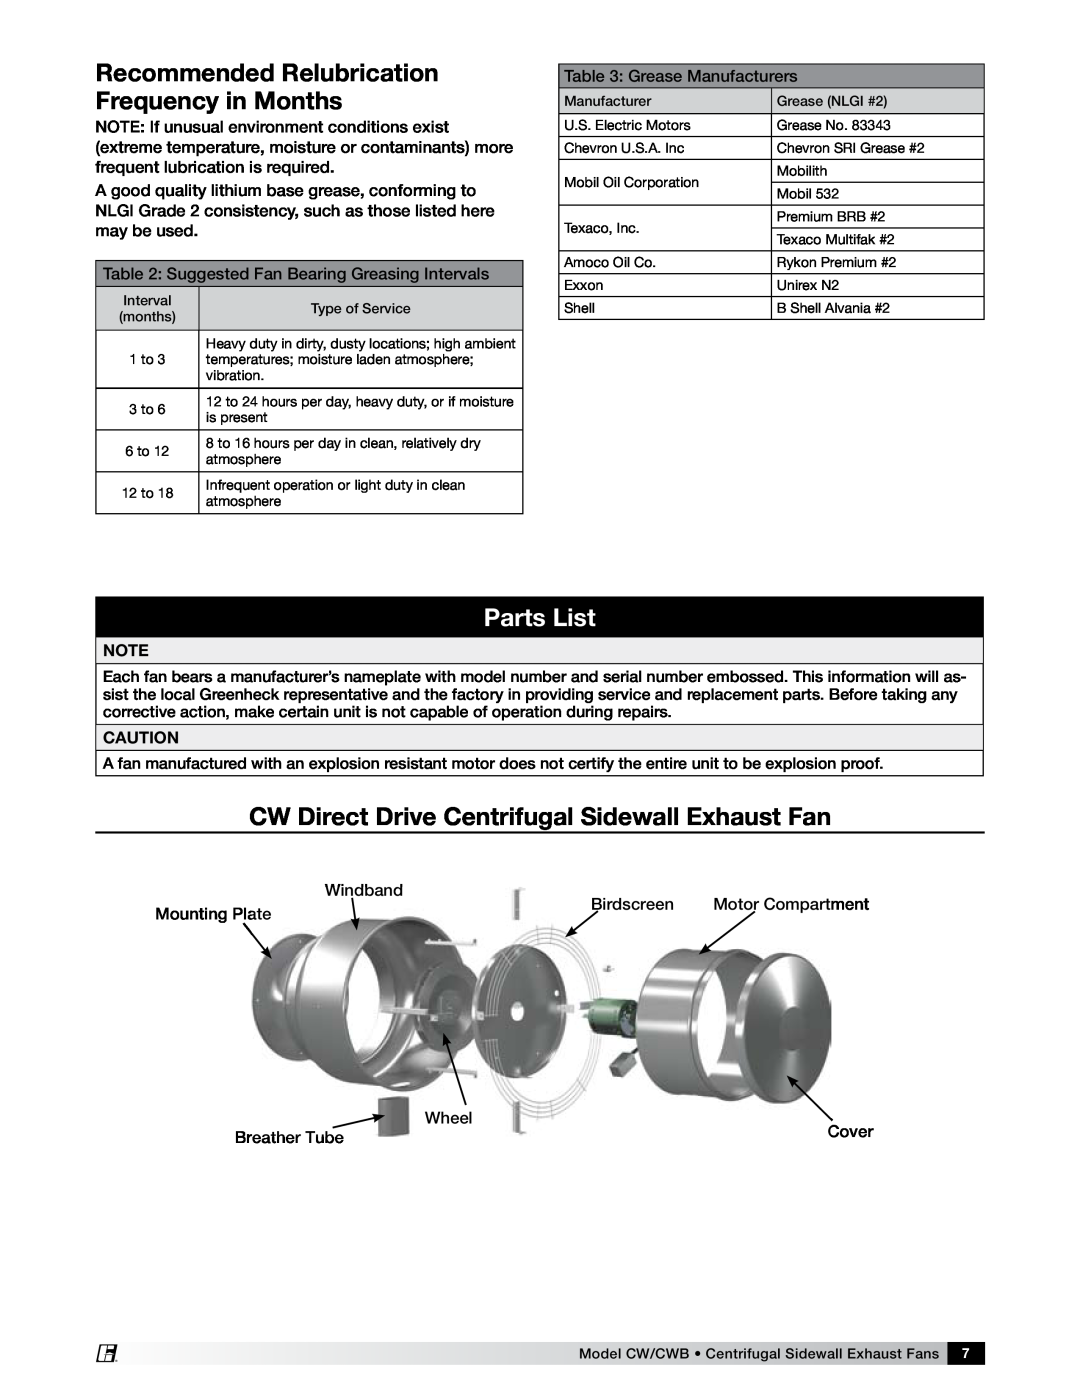 Greenheck Fan CW/CWB manual Parts List, CW Direct Drive Centrifugal Sidewall Exhaust Fan 